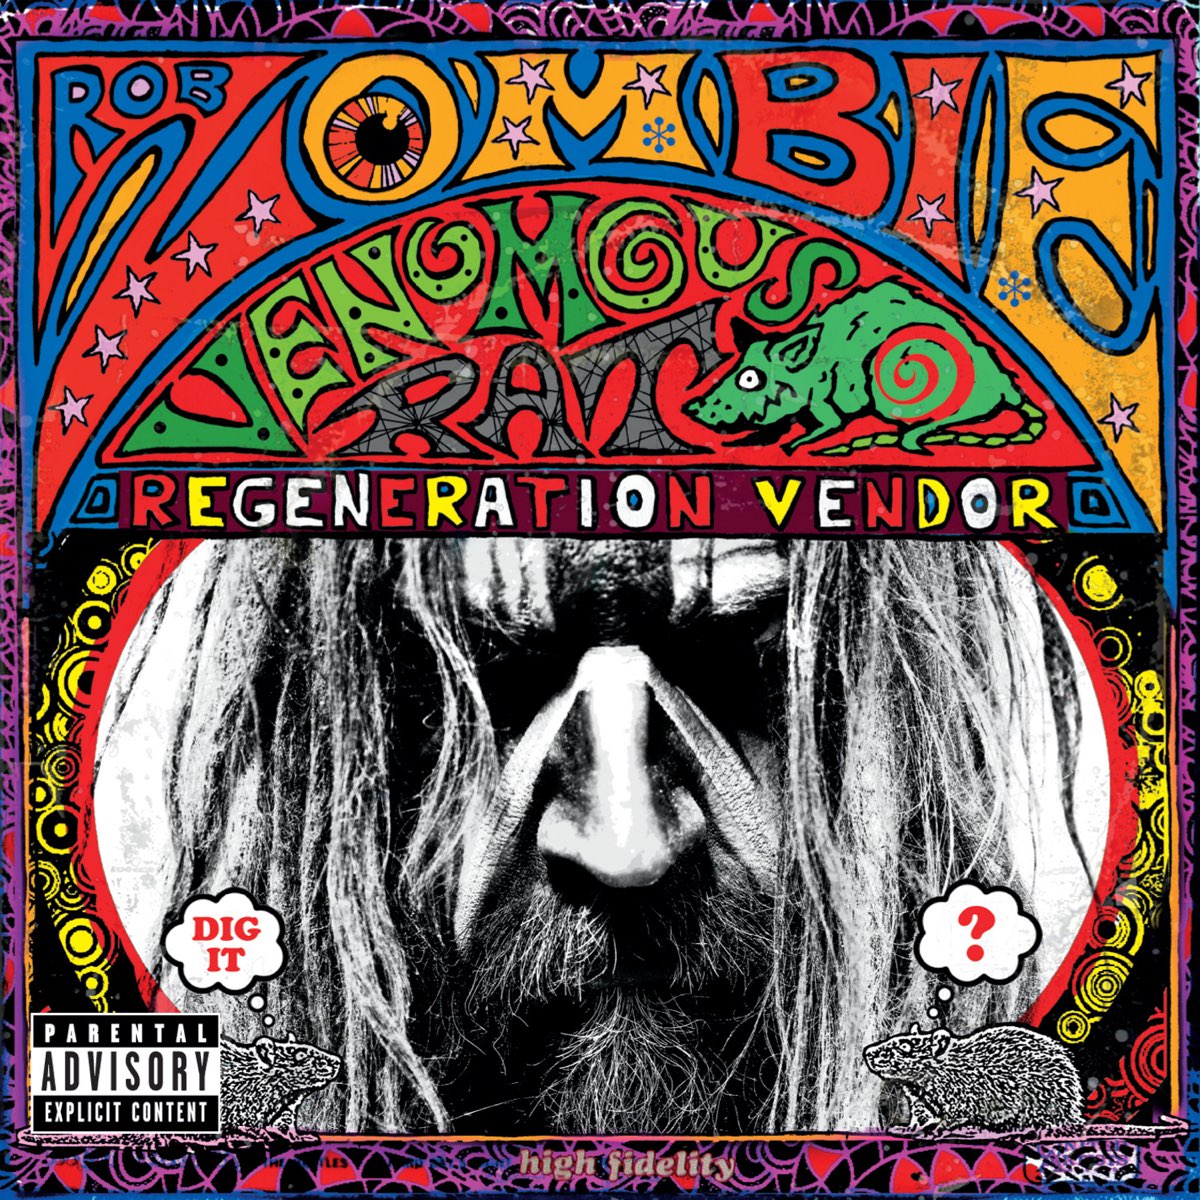 Rob Zombie Venomous Rat Regeneration Vendor cover artwork